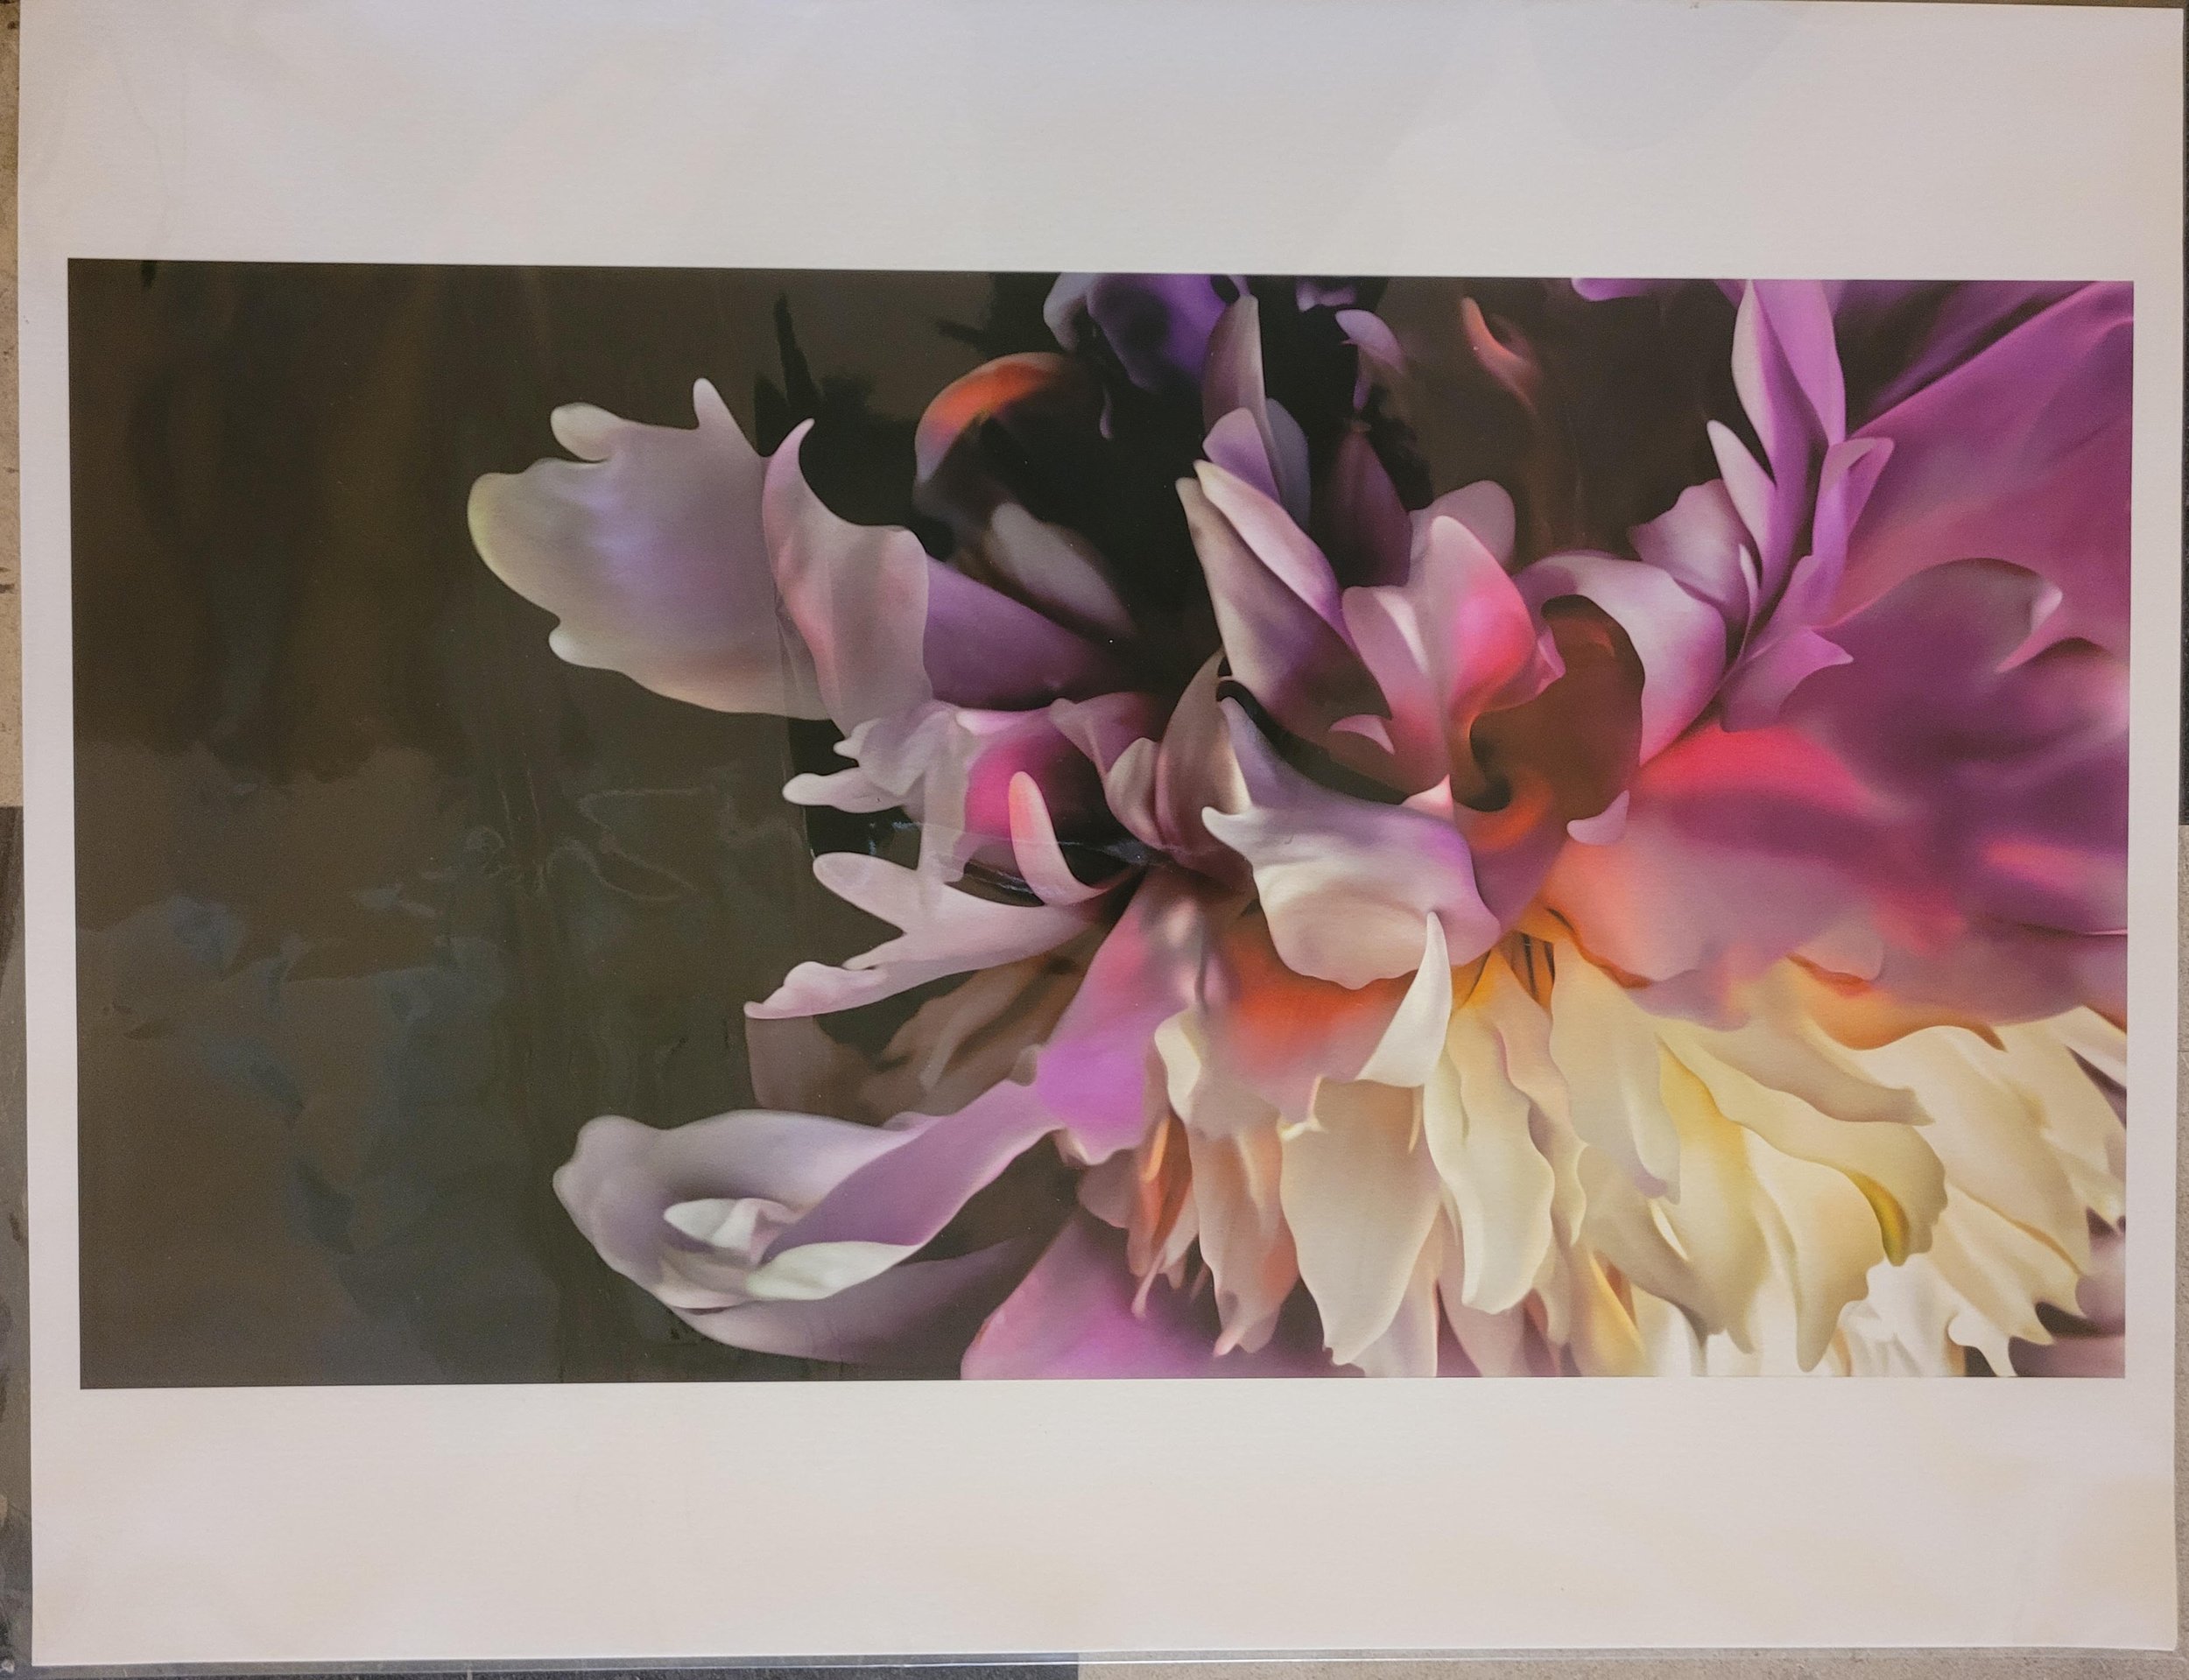  Joe Muir,  # 5,  From the Flower portfolio, 1/3, 2015-2020, Inkjet prints, 16 x 20 inches, $950. each (framed) 